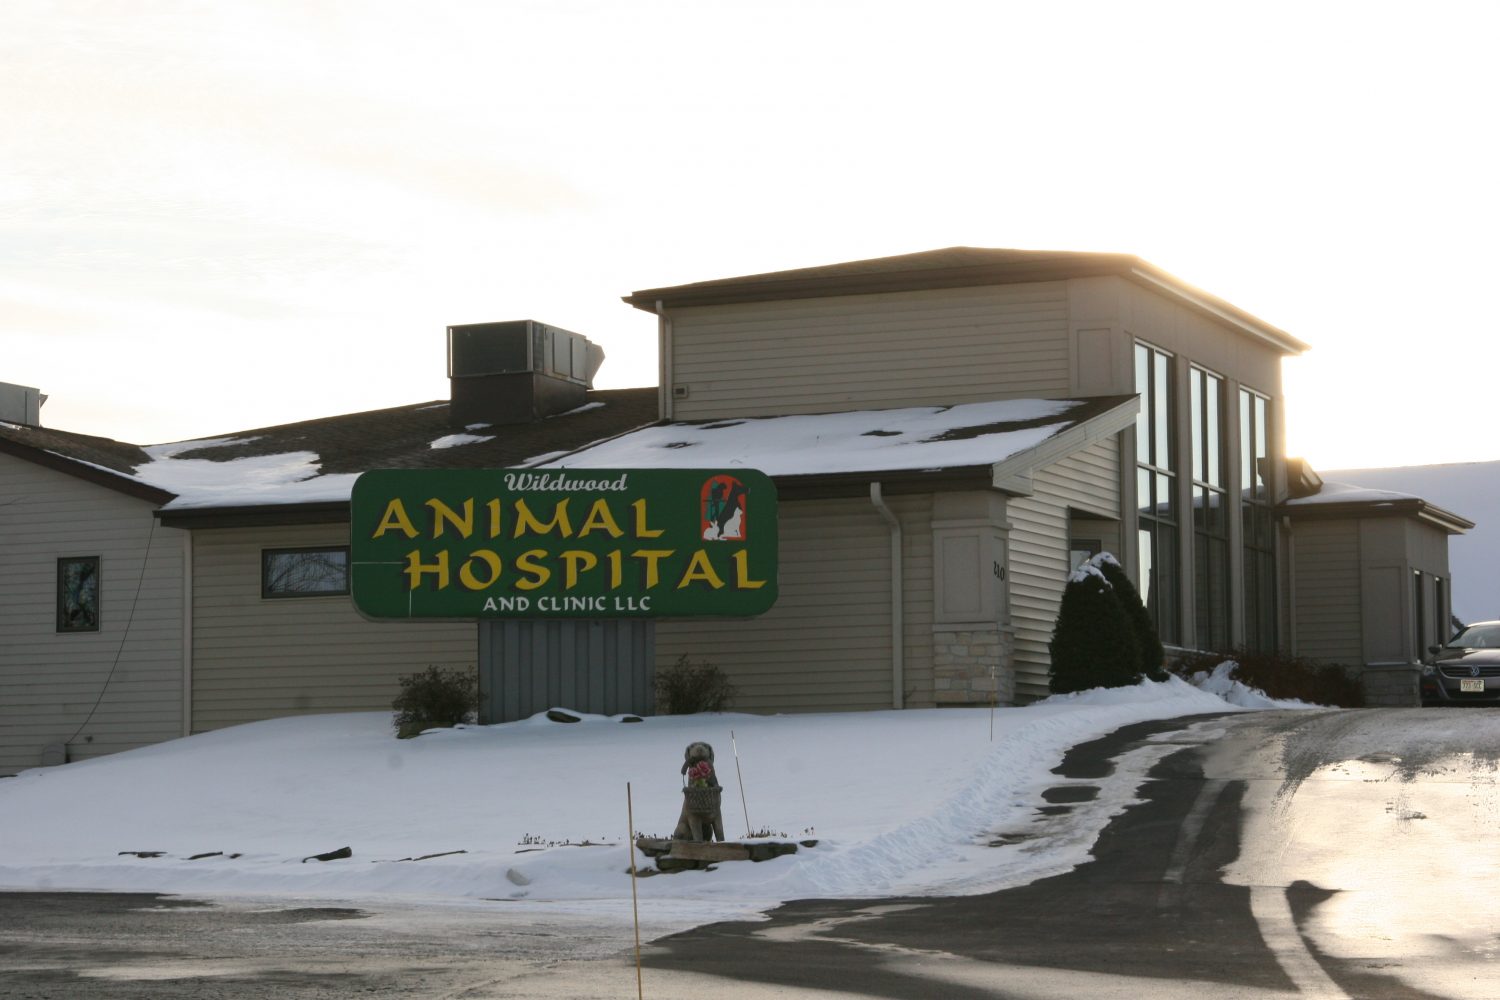 Wildwood Animal Hospital and Clinic